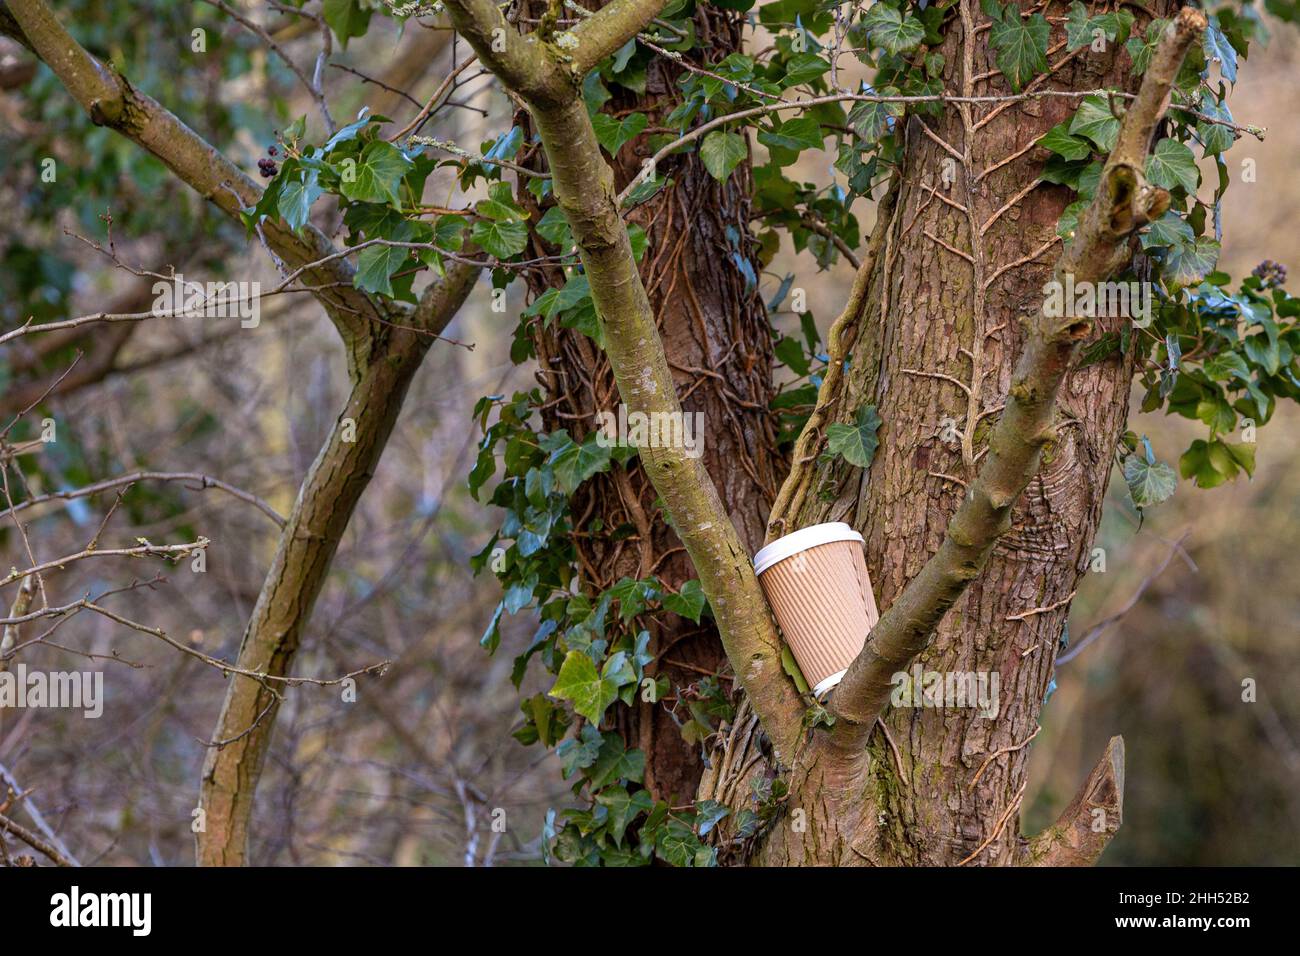 Una tazza di caffè scartata depositata in un albero in un parco di campagna Foto Stock